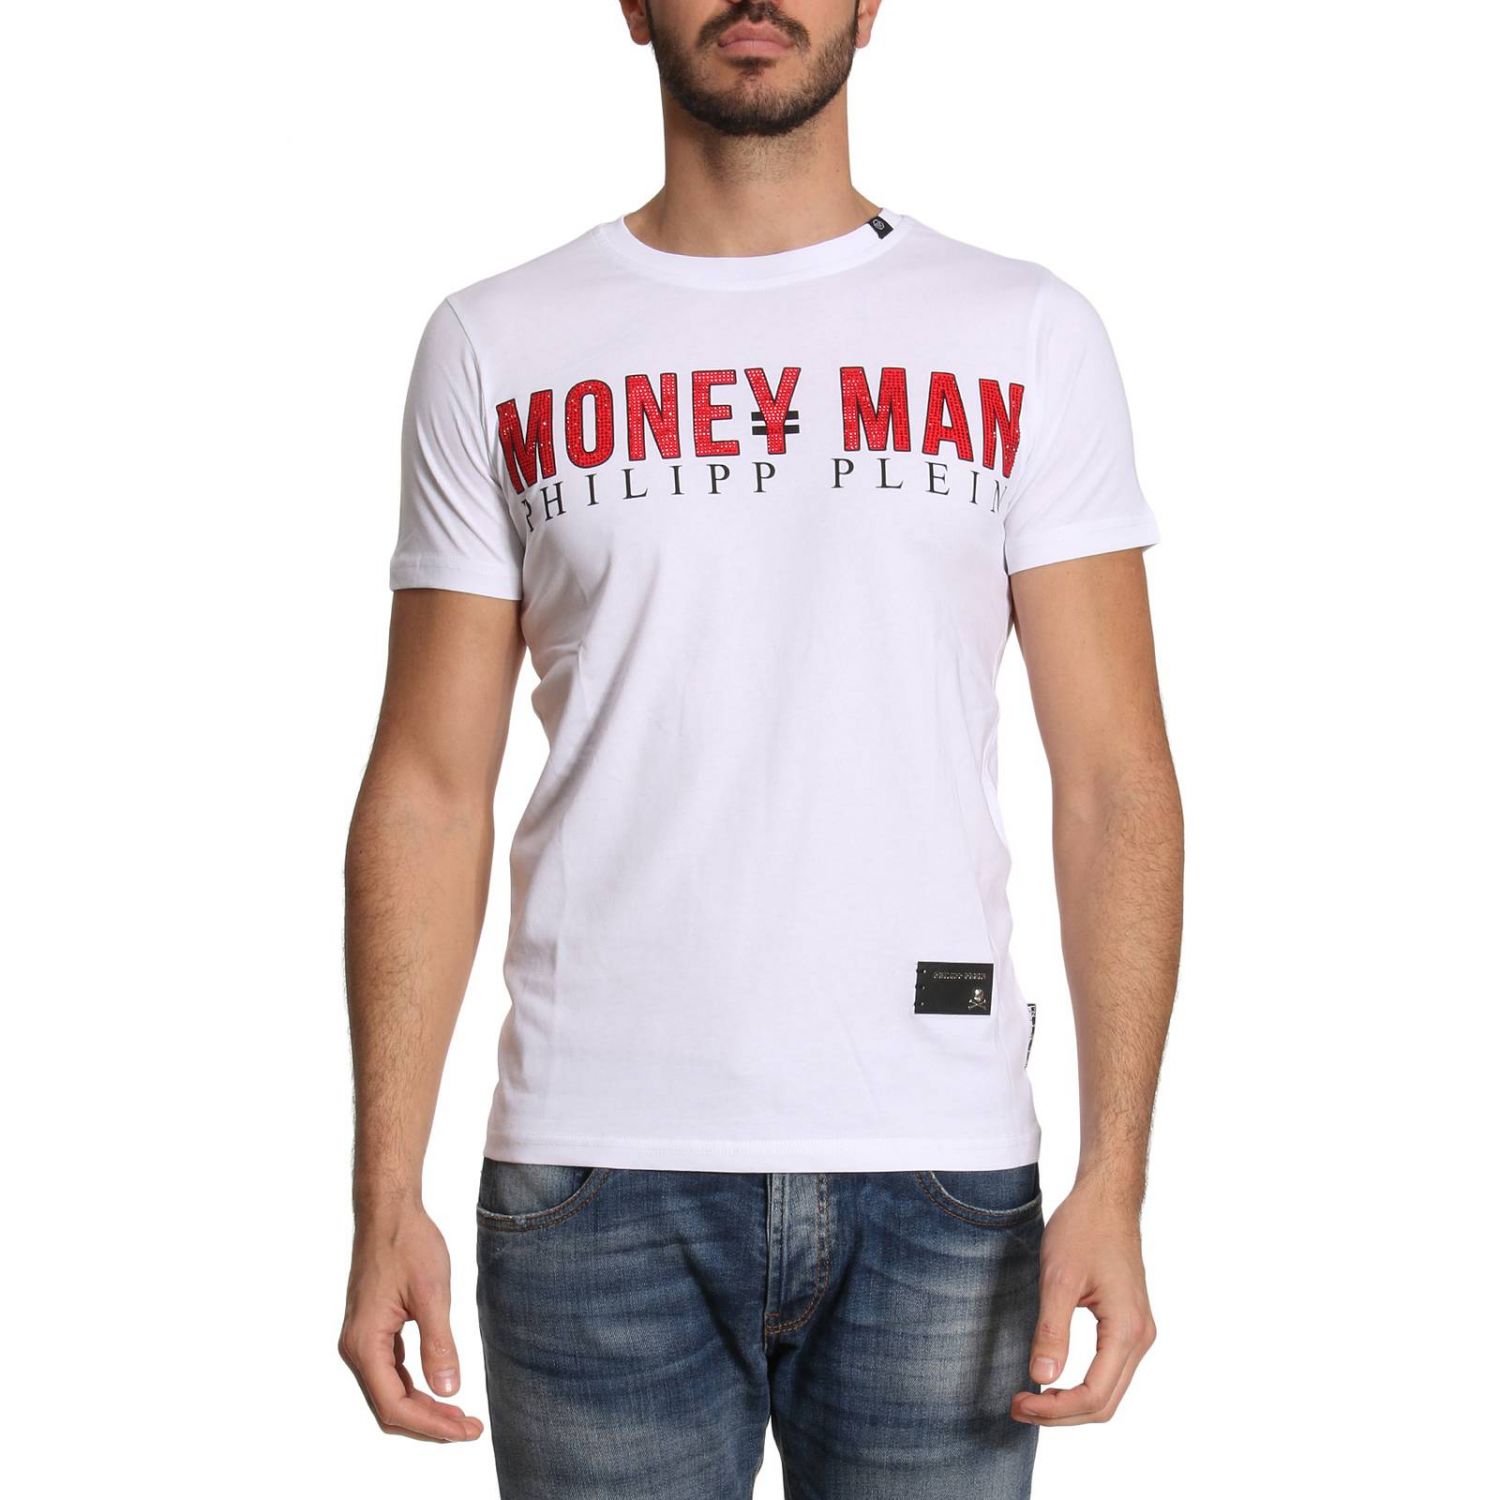 philipp plein t shirt money man